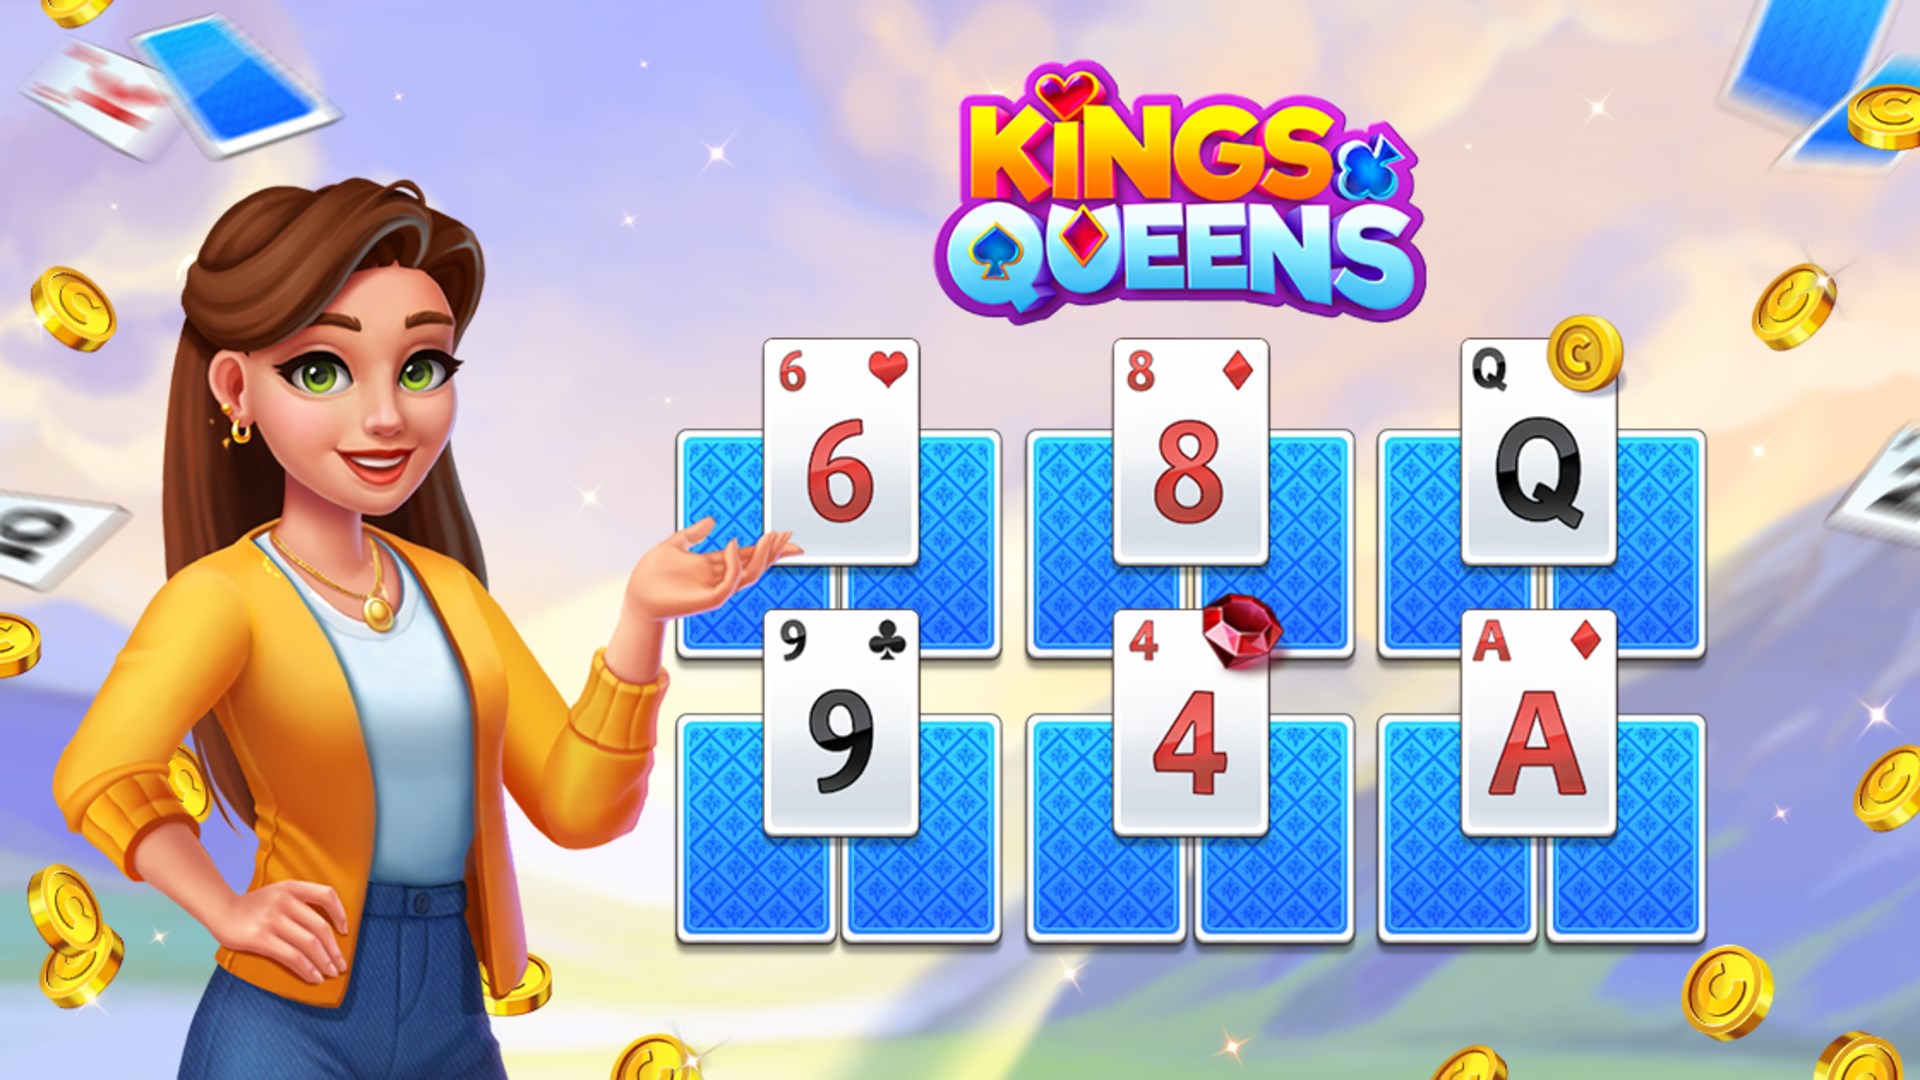 Игры короли и дамы пасьянс три пика. Короли и дамы пасьянс три пика. Короли и дамы: пасьянс трипика. Clever apps игра.